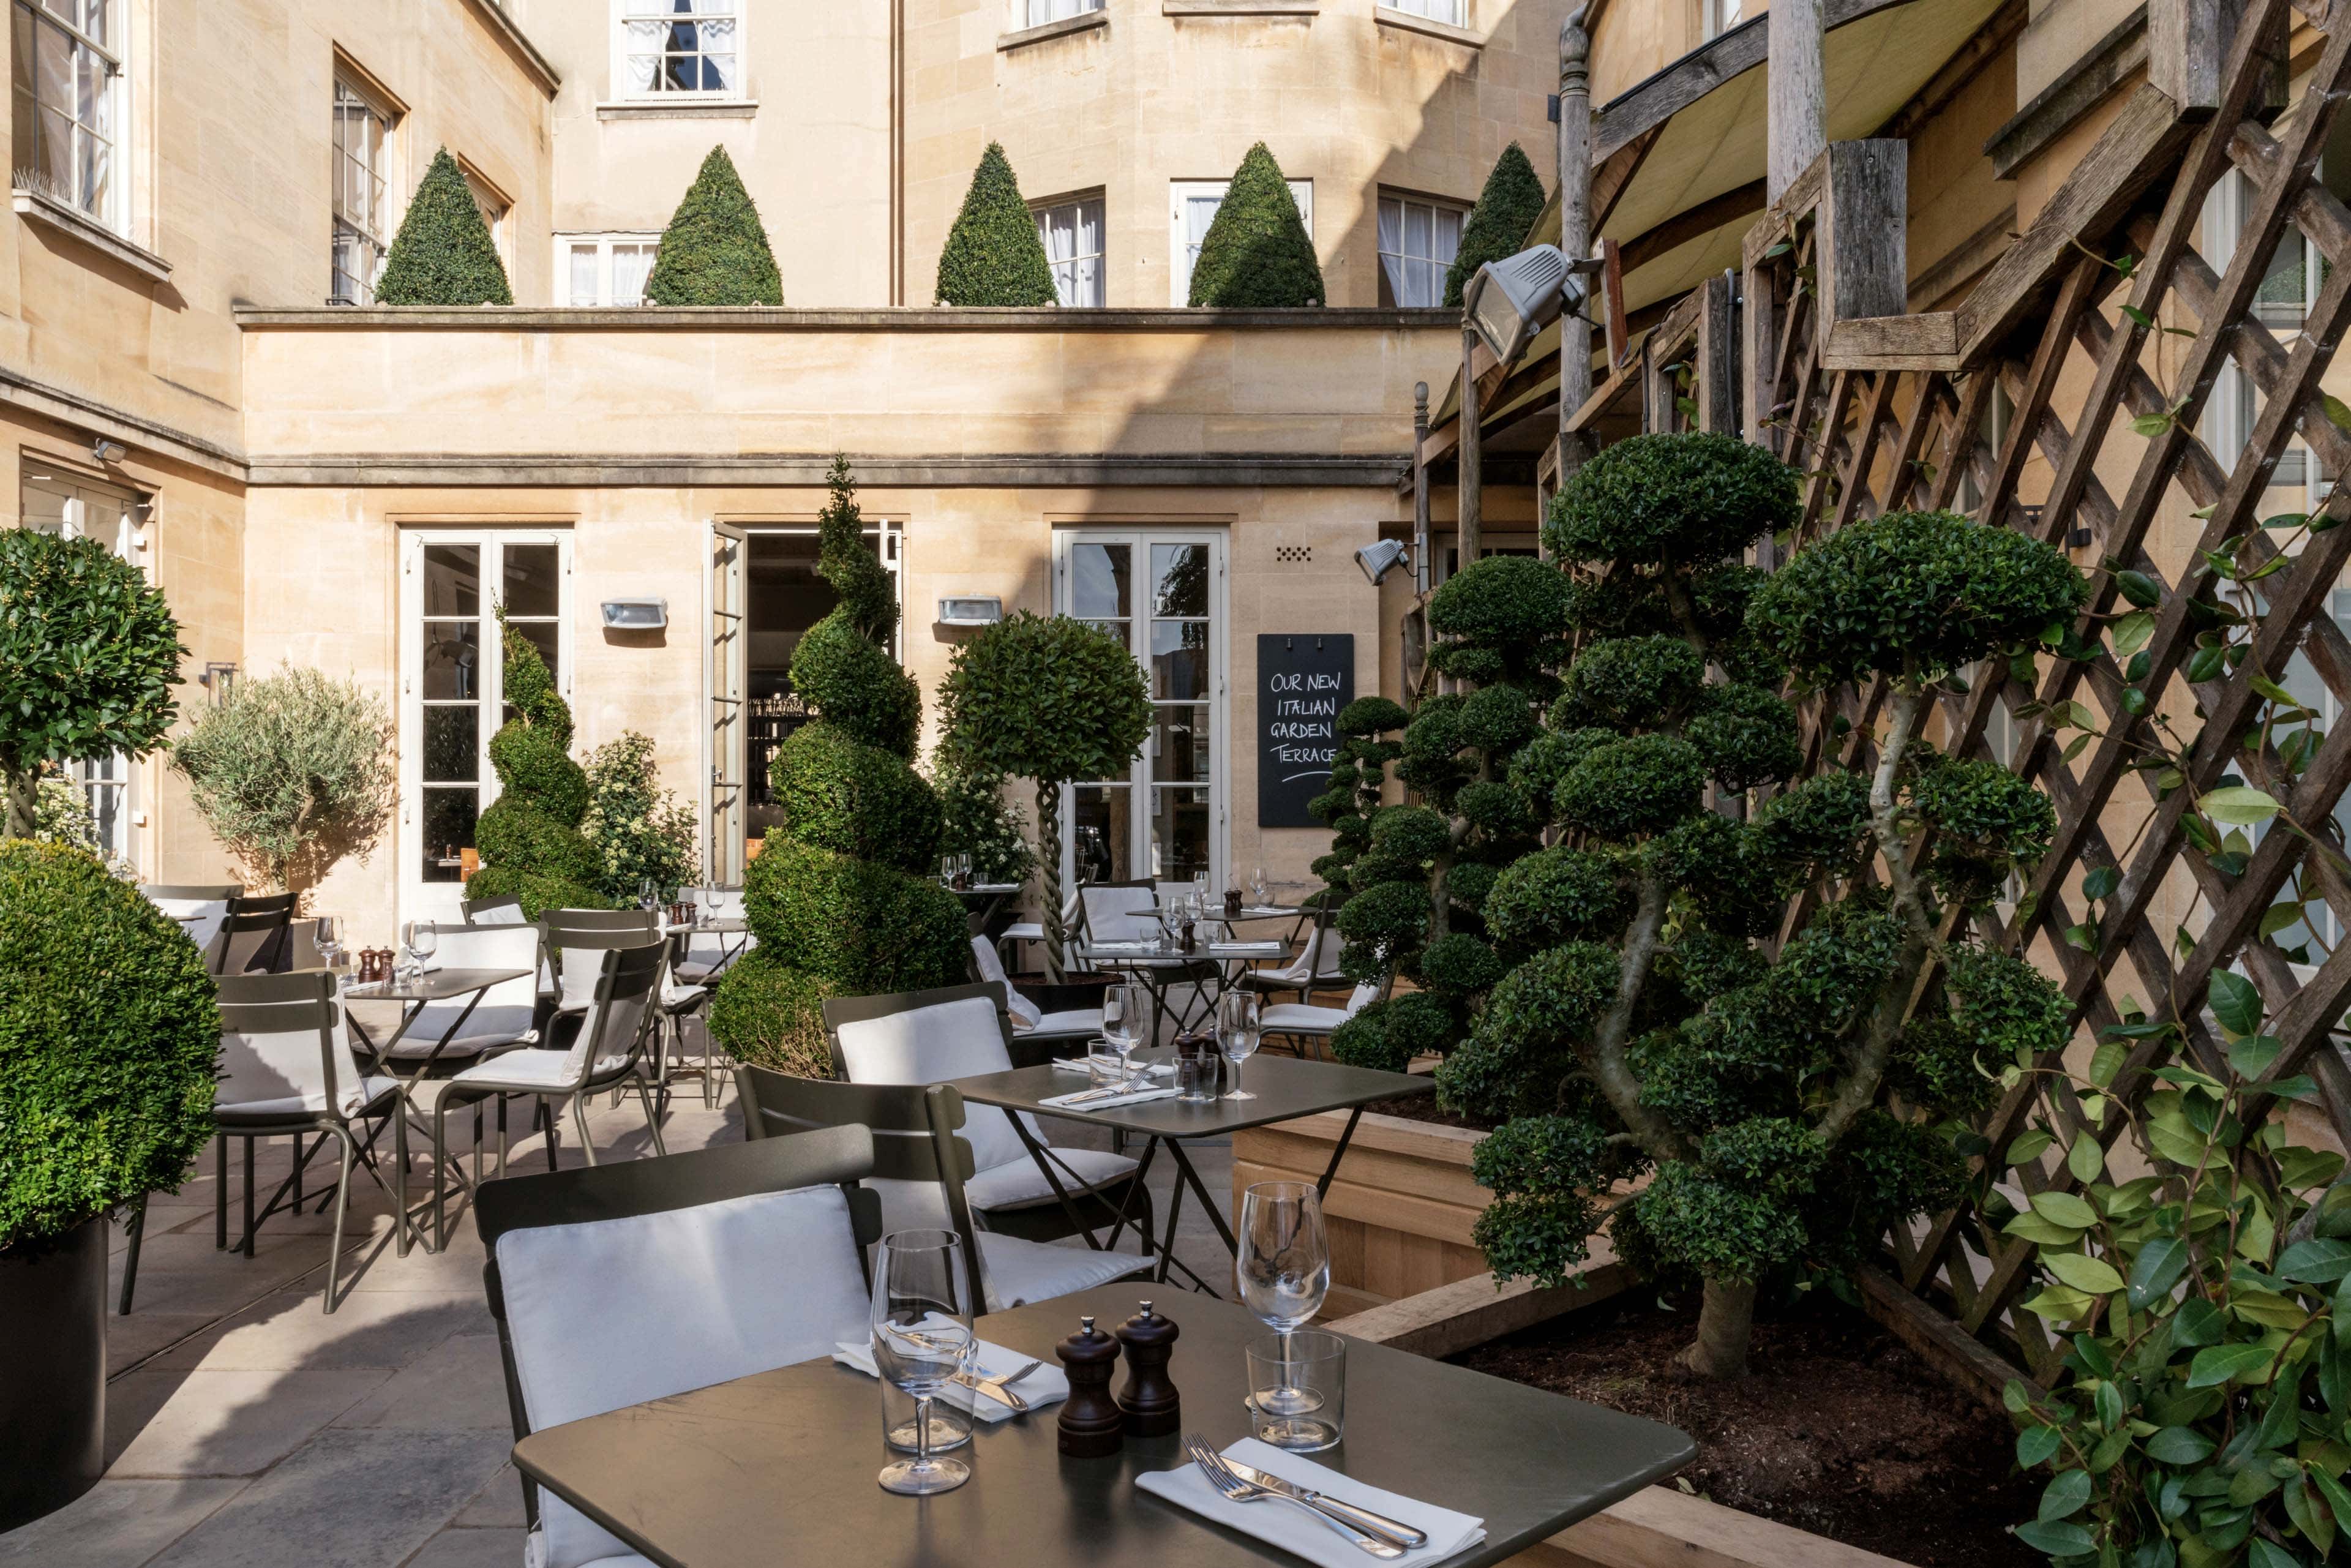 0009 - 2016 - Quod Restaurant & Bar - Oxford - High Res - Italian Terrace Dining (Press Web)